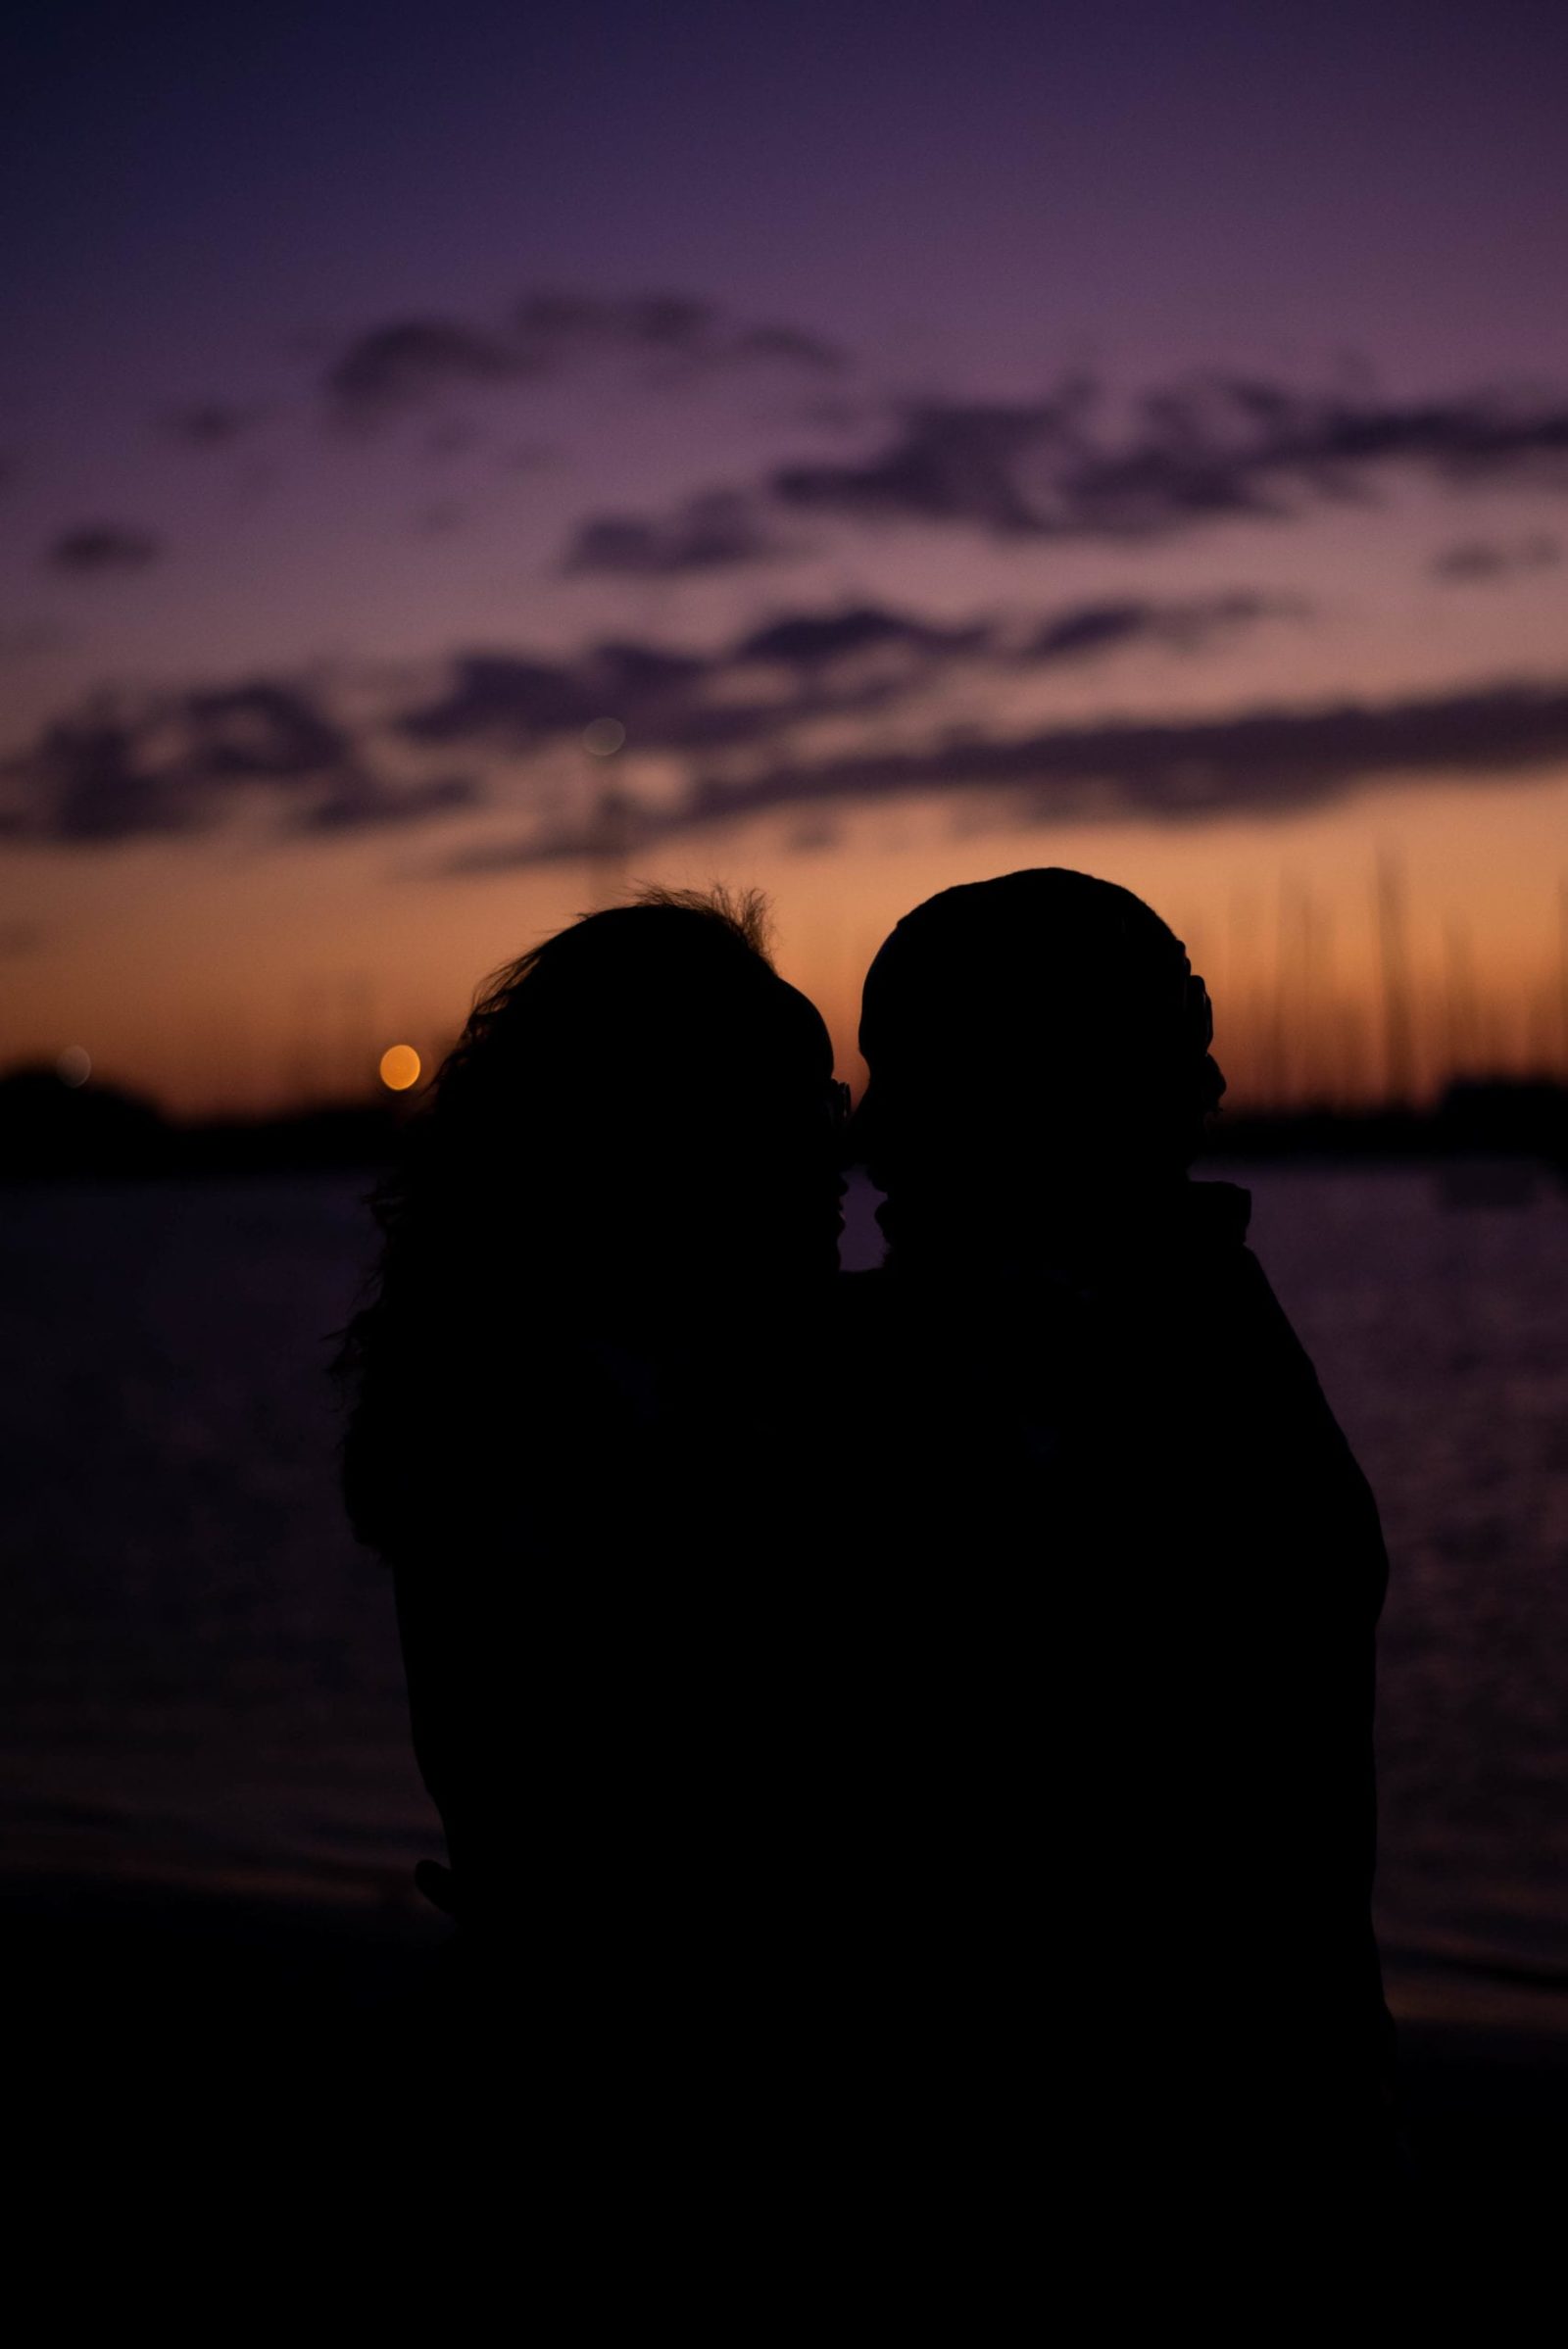 Davis island dog beach engagement photography session at sunset silhouette photo of couple kissing purple and orange sunset